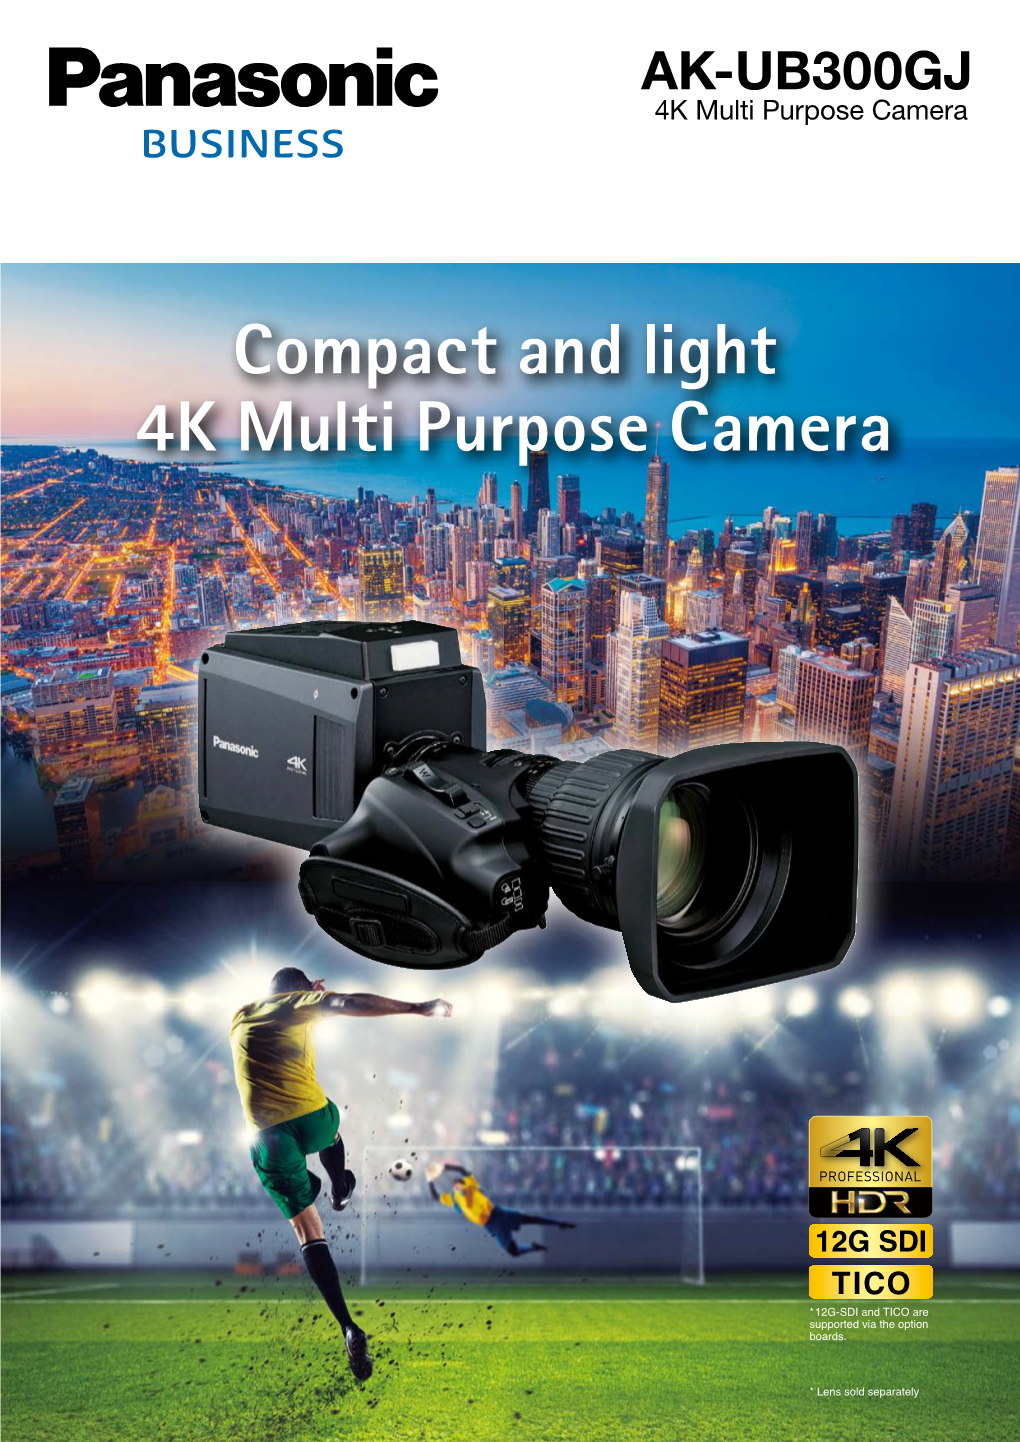 Compact and Light 4K Multi Purpose Camera